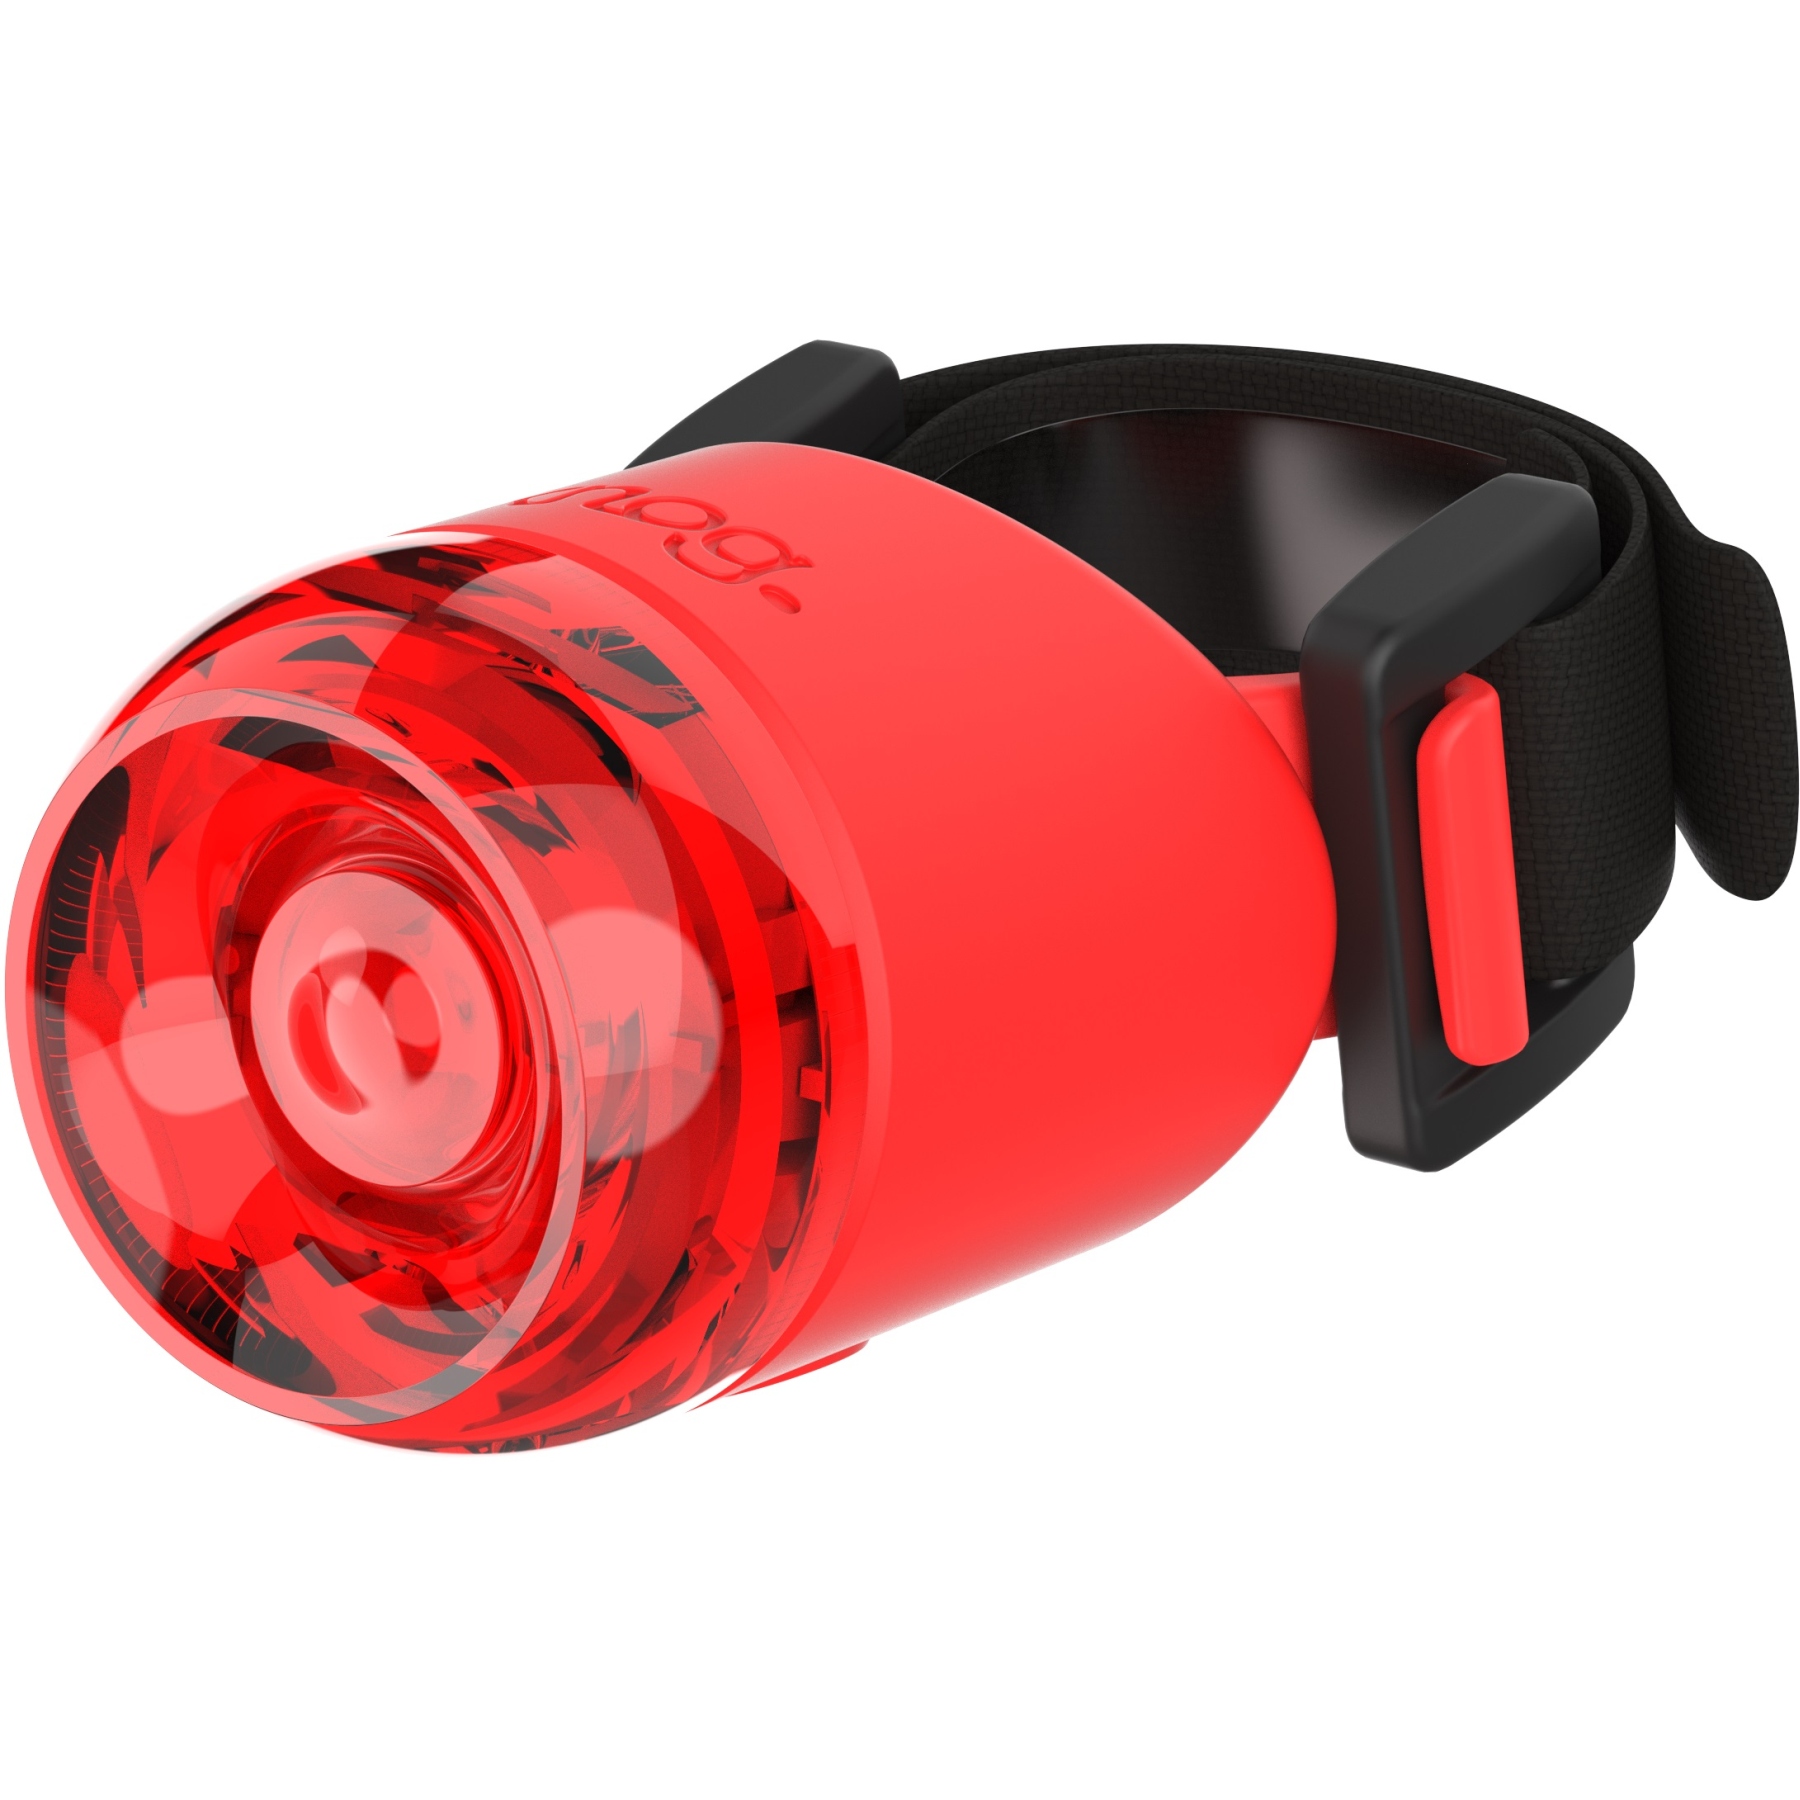 Productfoto van Knog Plug Rear Bike Light - 10 Lumen - red